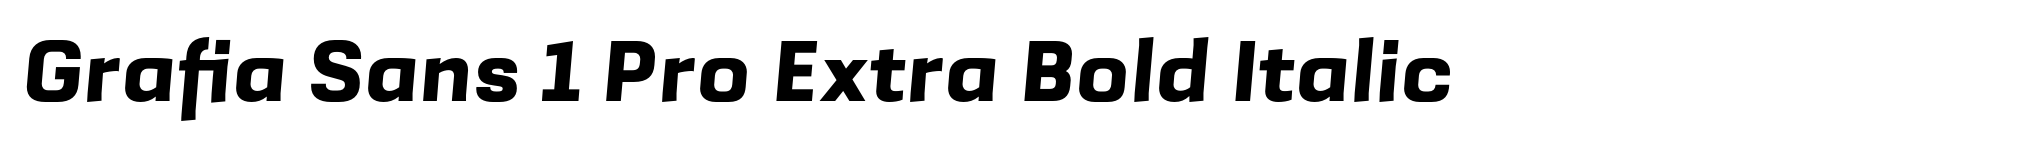 Grafia Sans 1 Pro Extra Bold Italic image